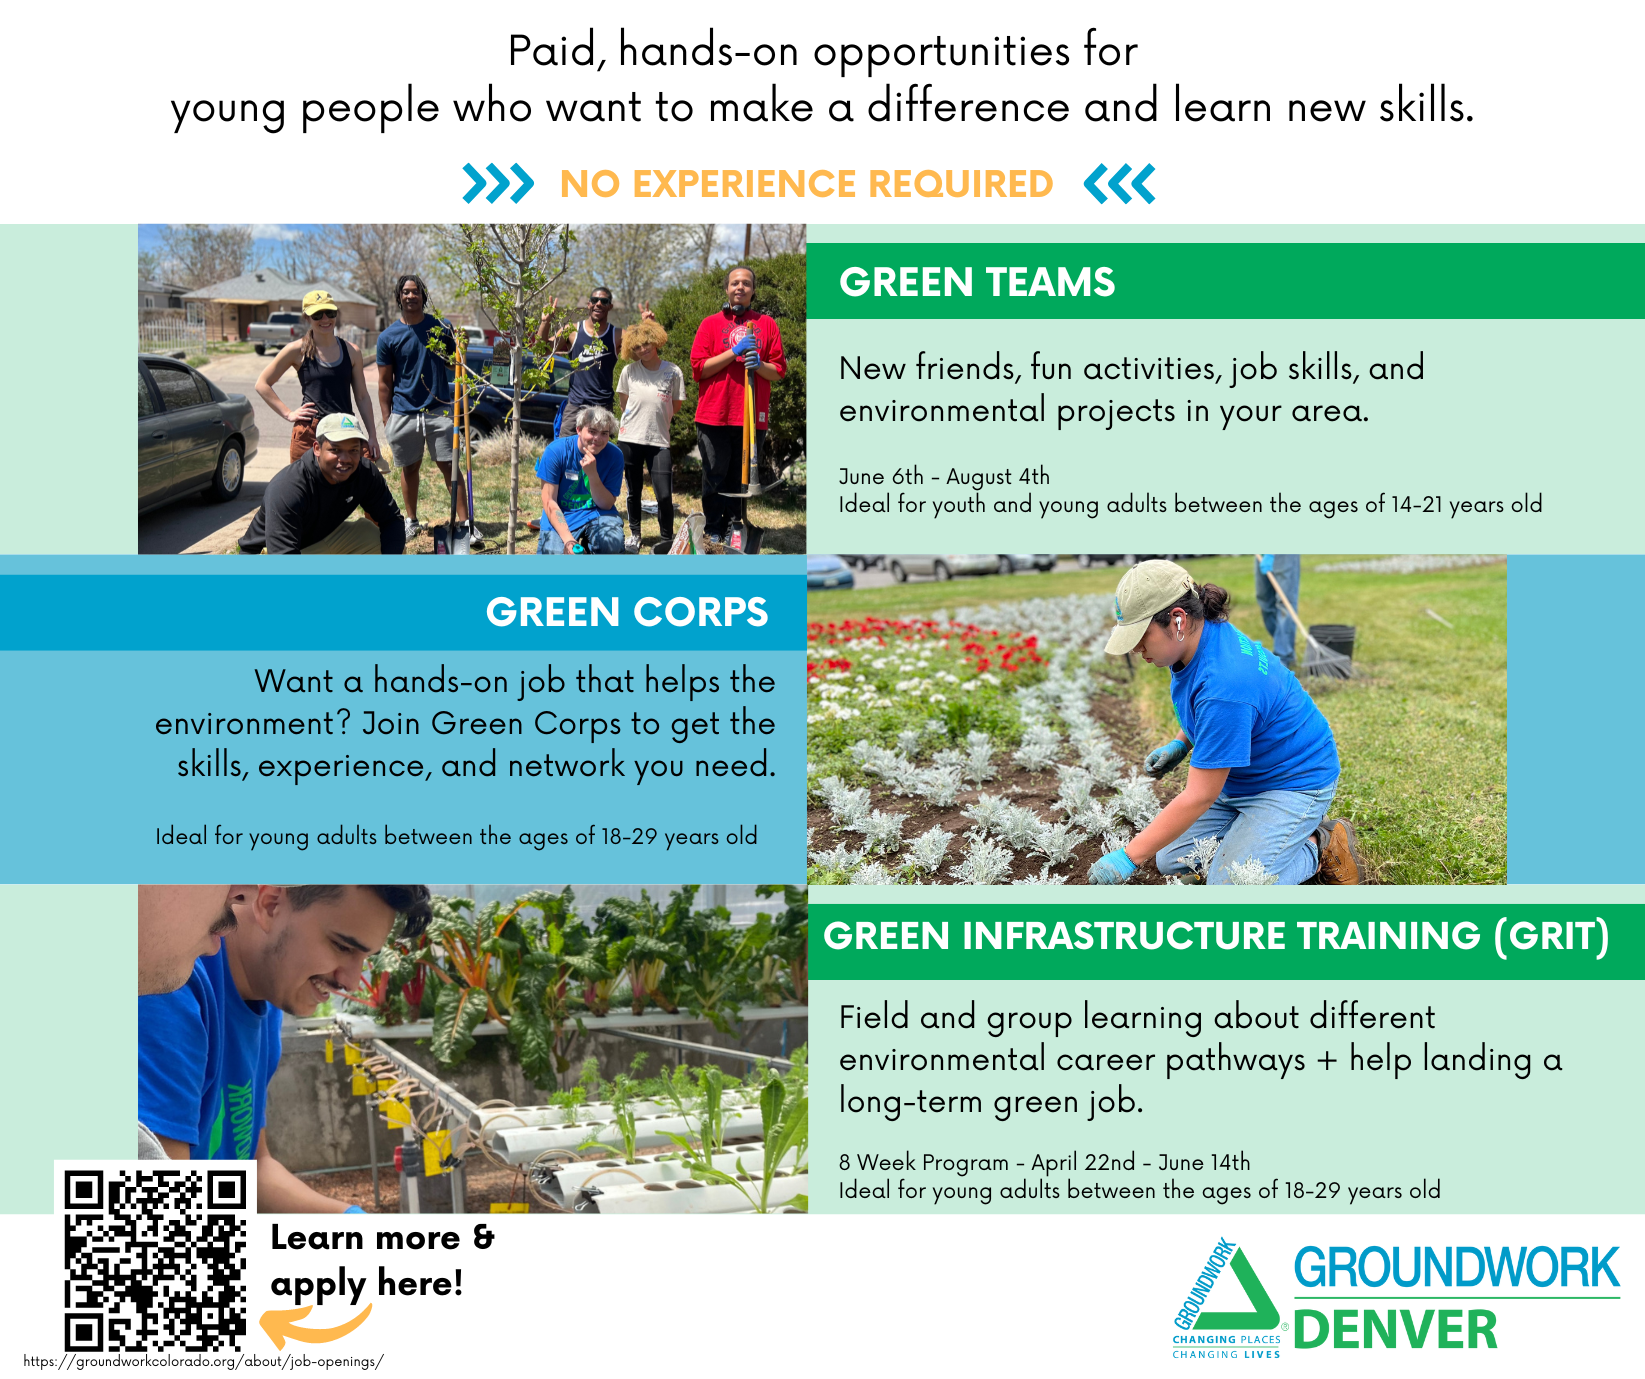 Groundwork Denver Employment Opportunities